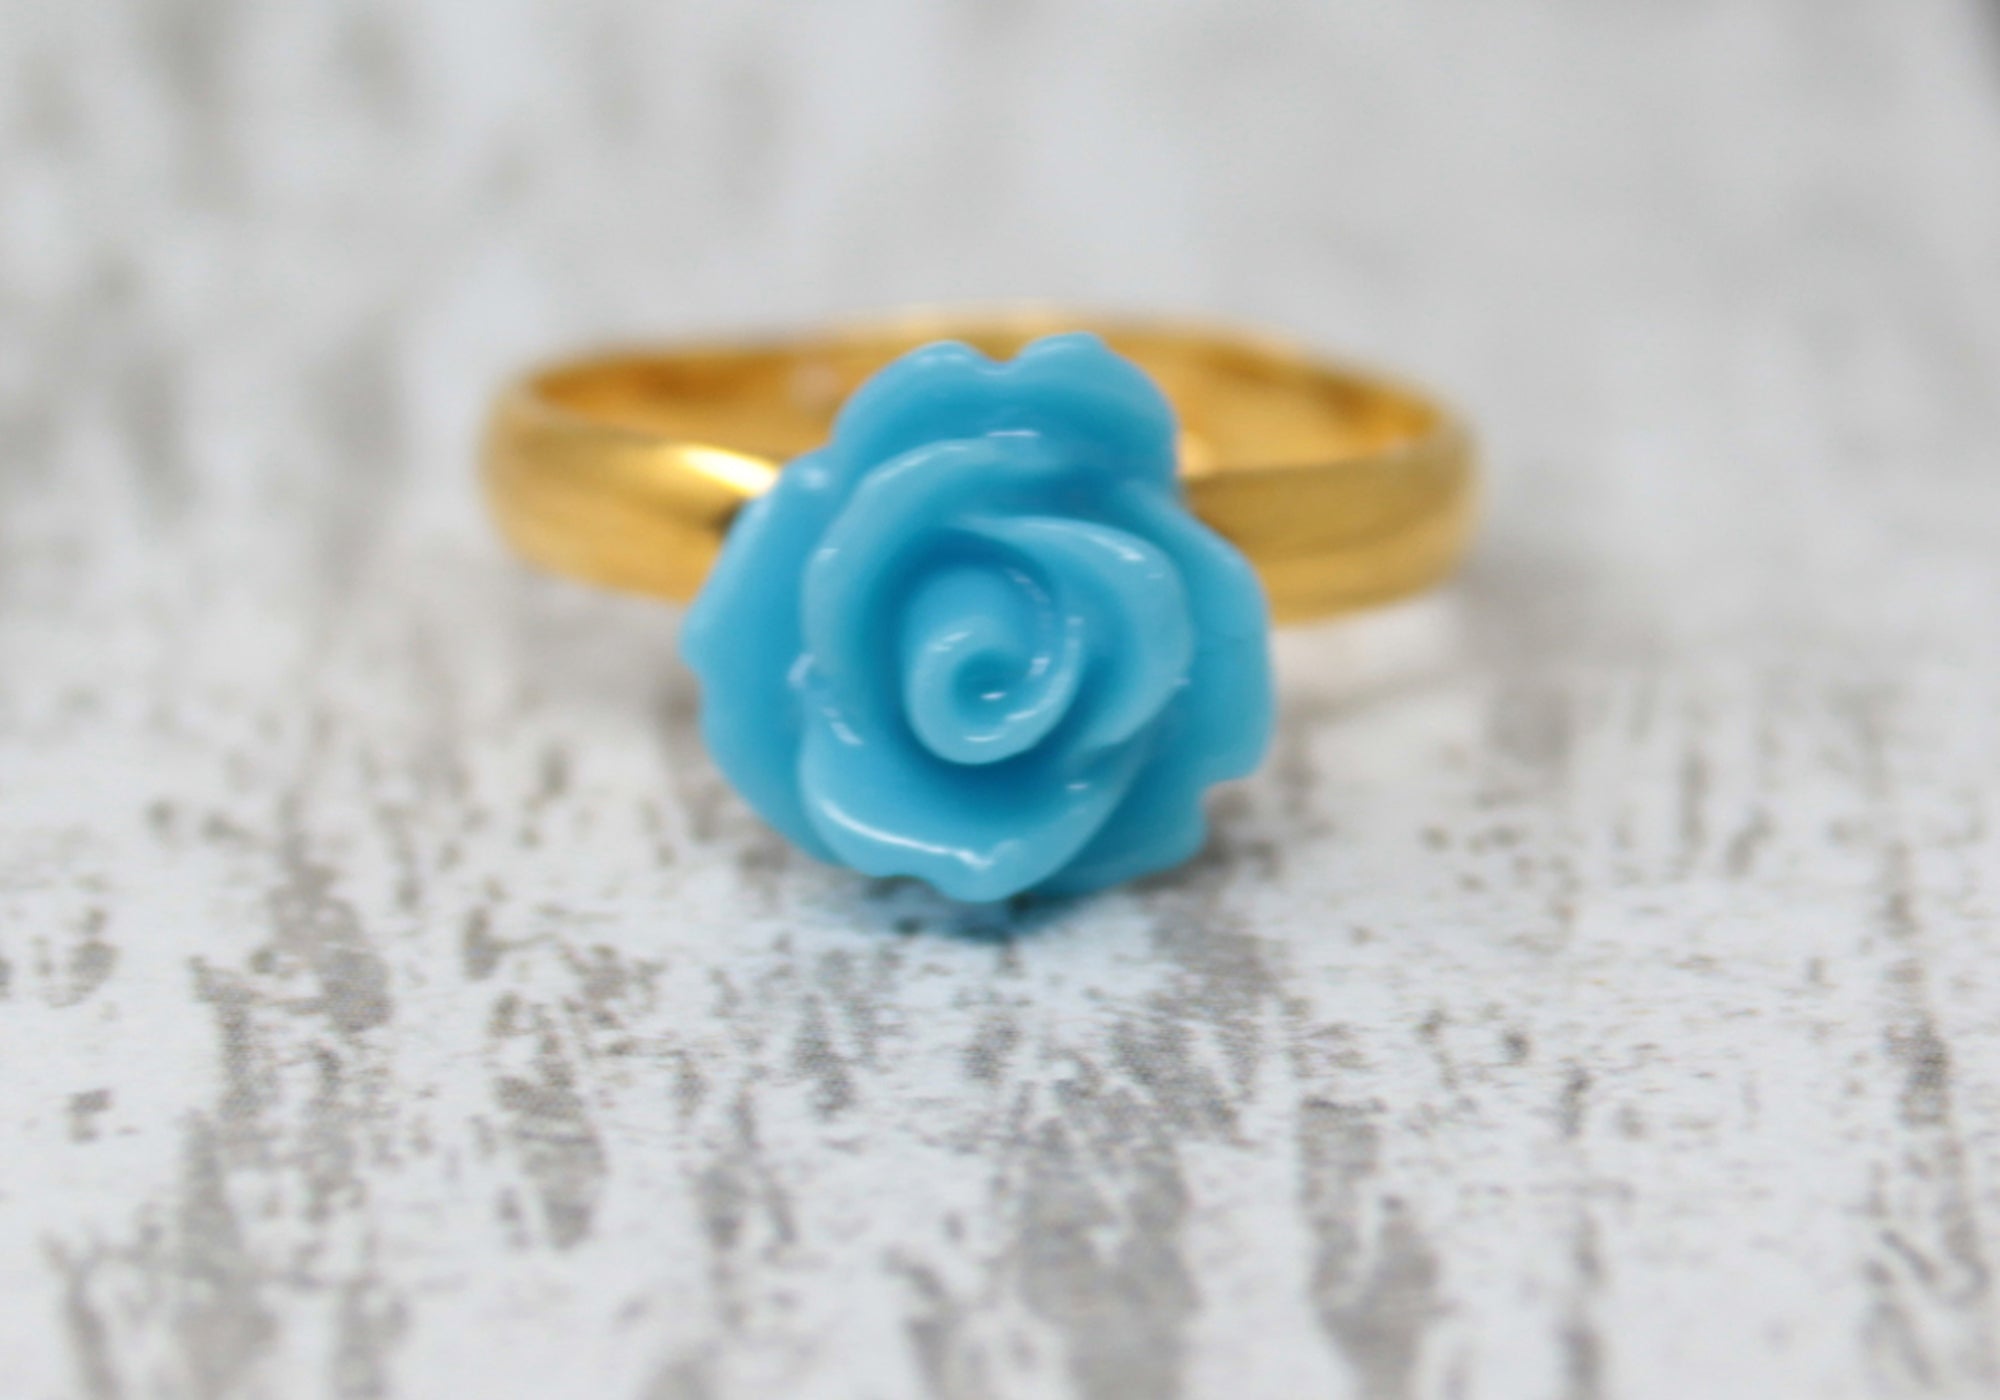 Tiny Petals Stacking Ring ~ Sky Blue Rose